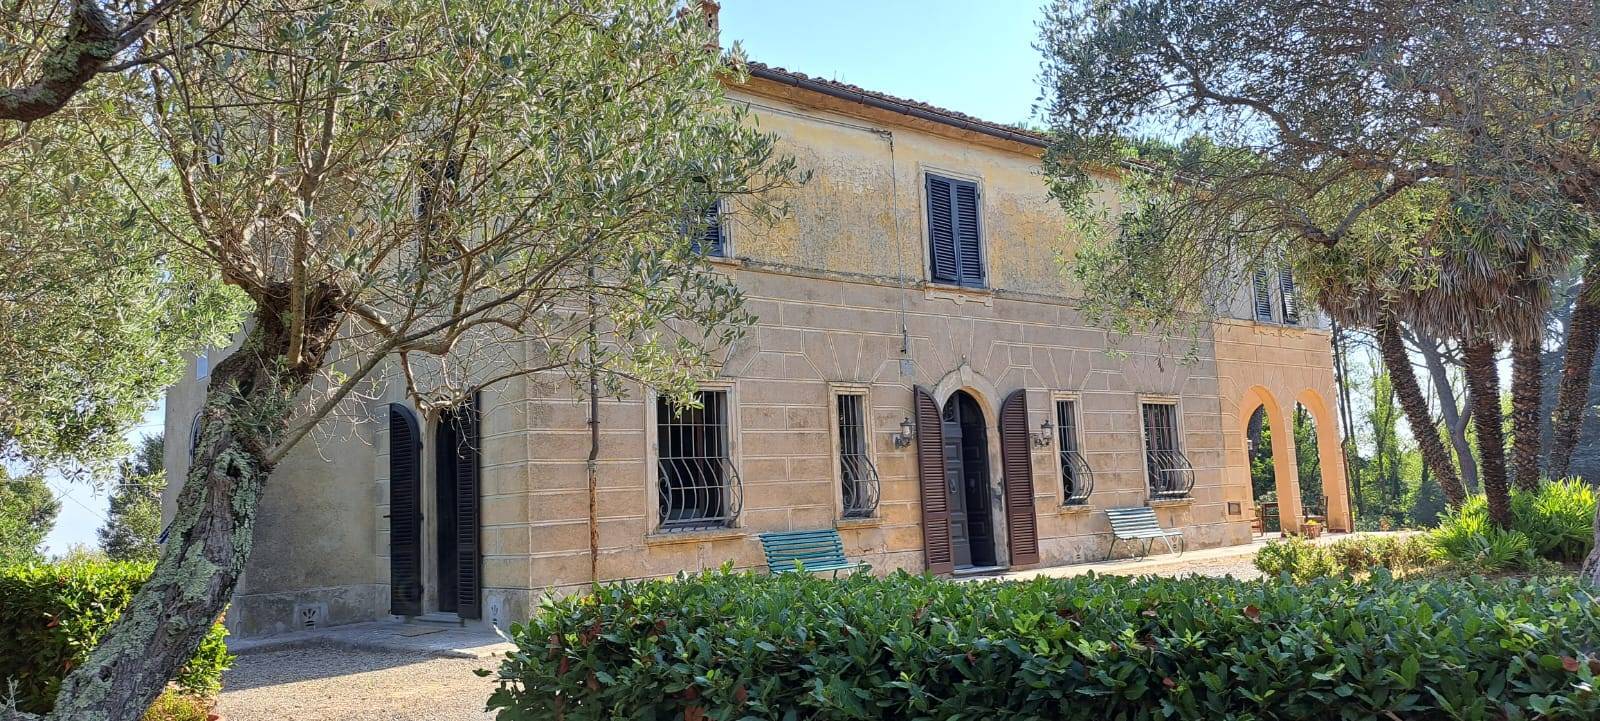 For sale villa by the sea Crespina Toscana